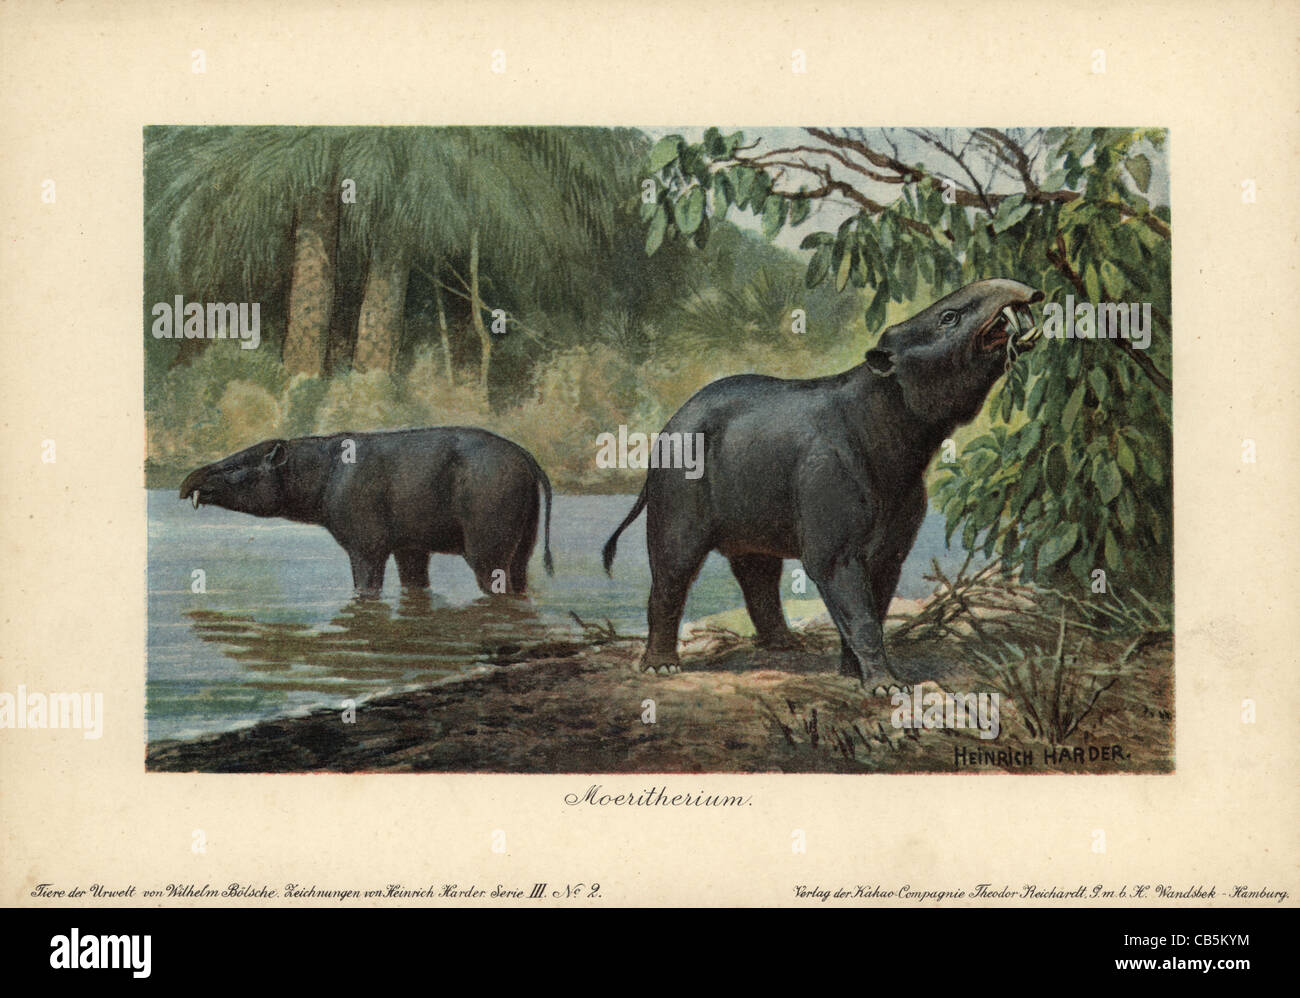 Moeritherium, genere estinto di mammiferi preistorici relativi all'elefante. Foto Stock